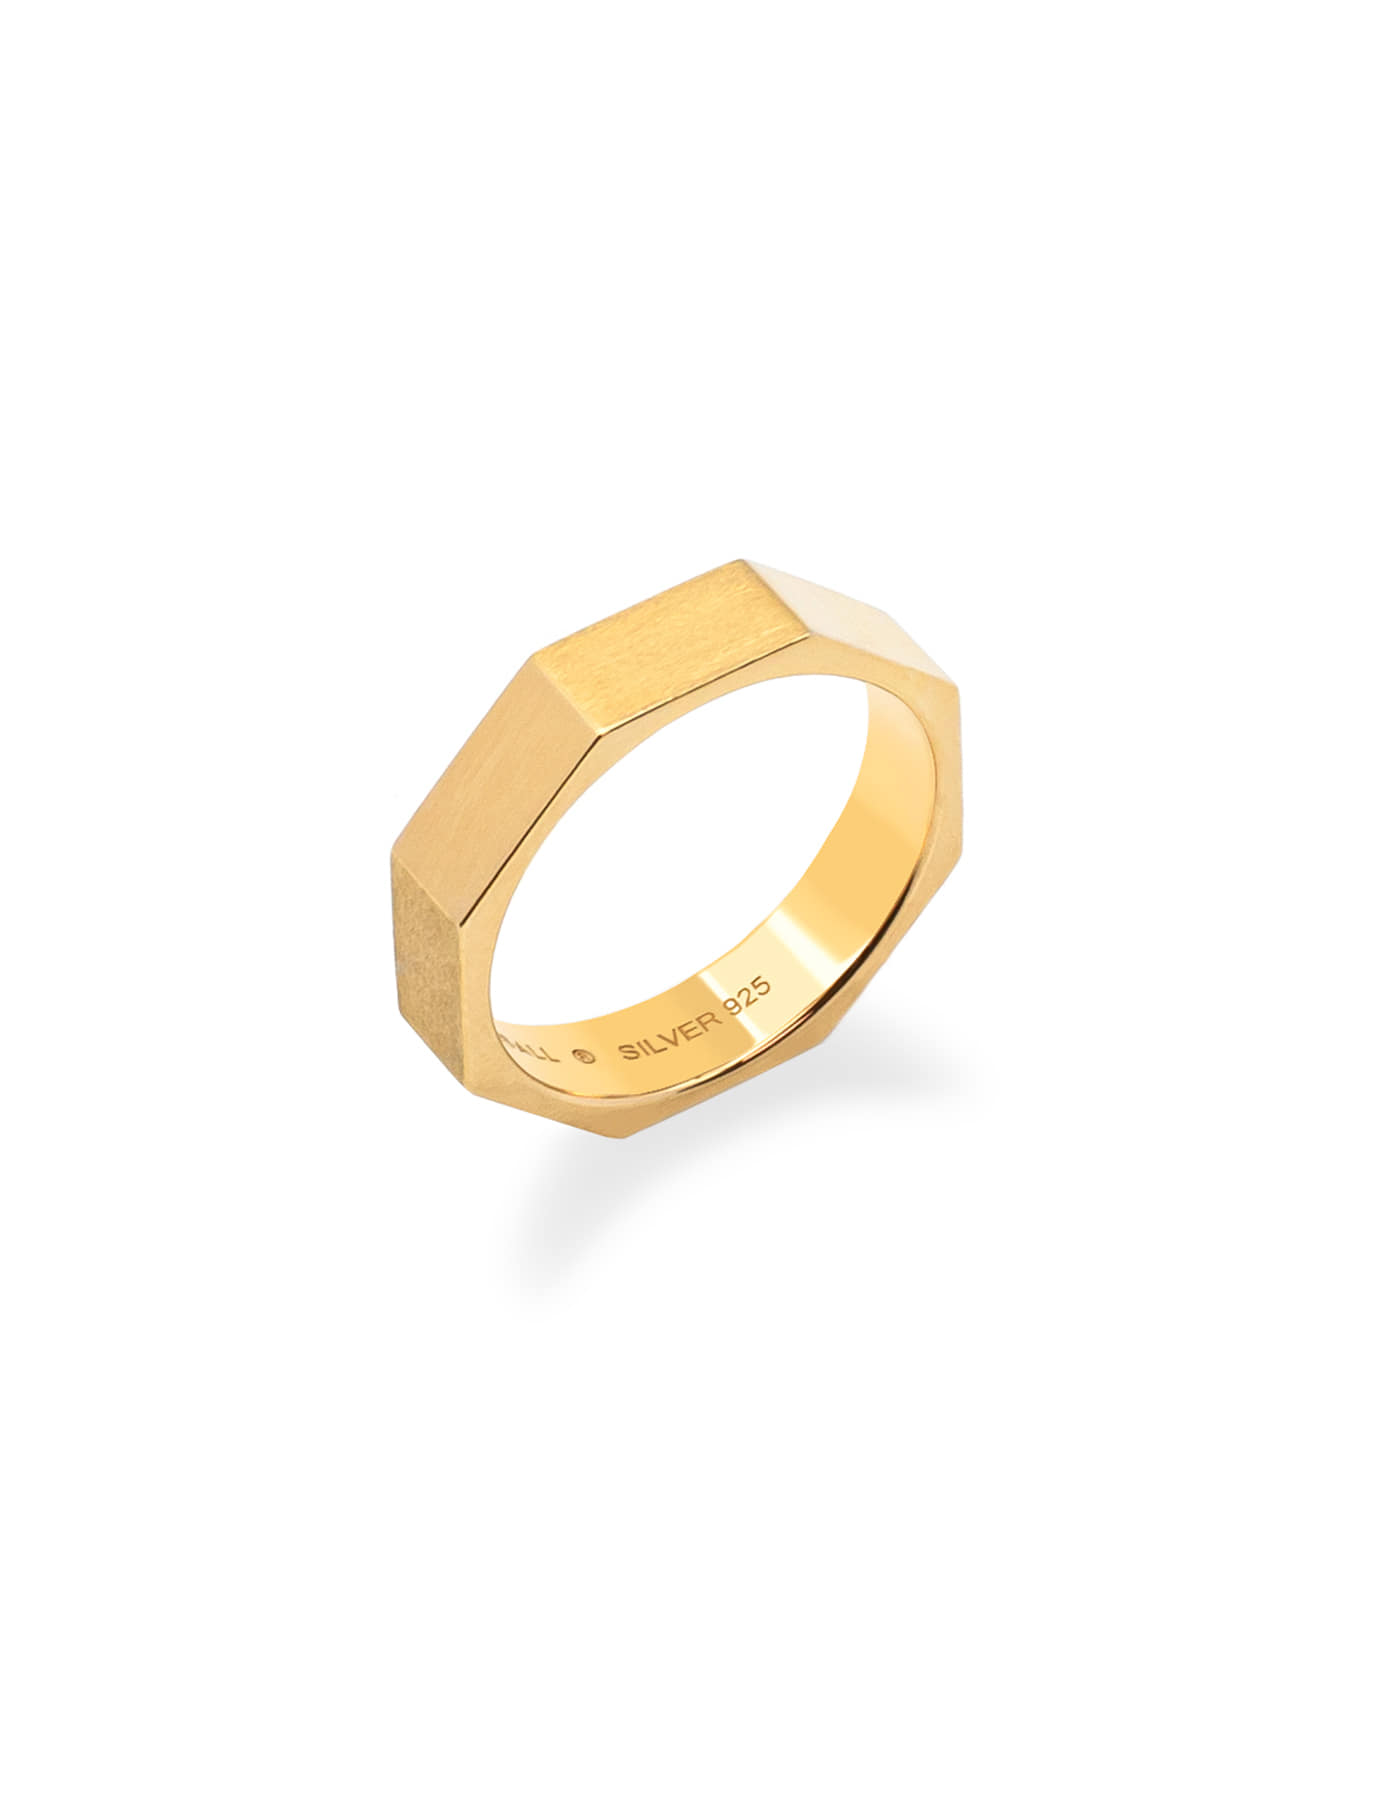 Octagon ring (G)